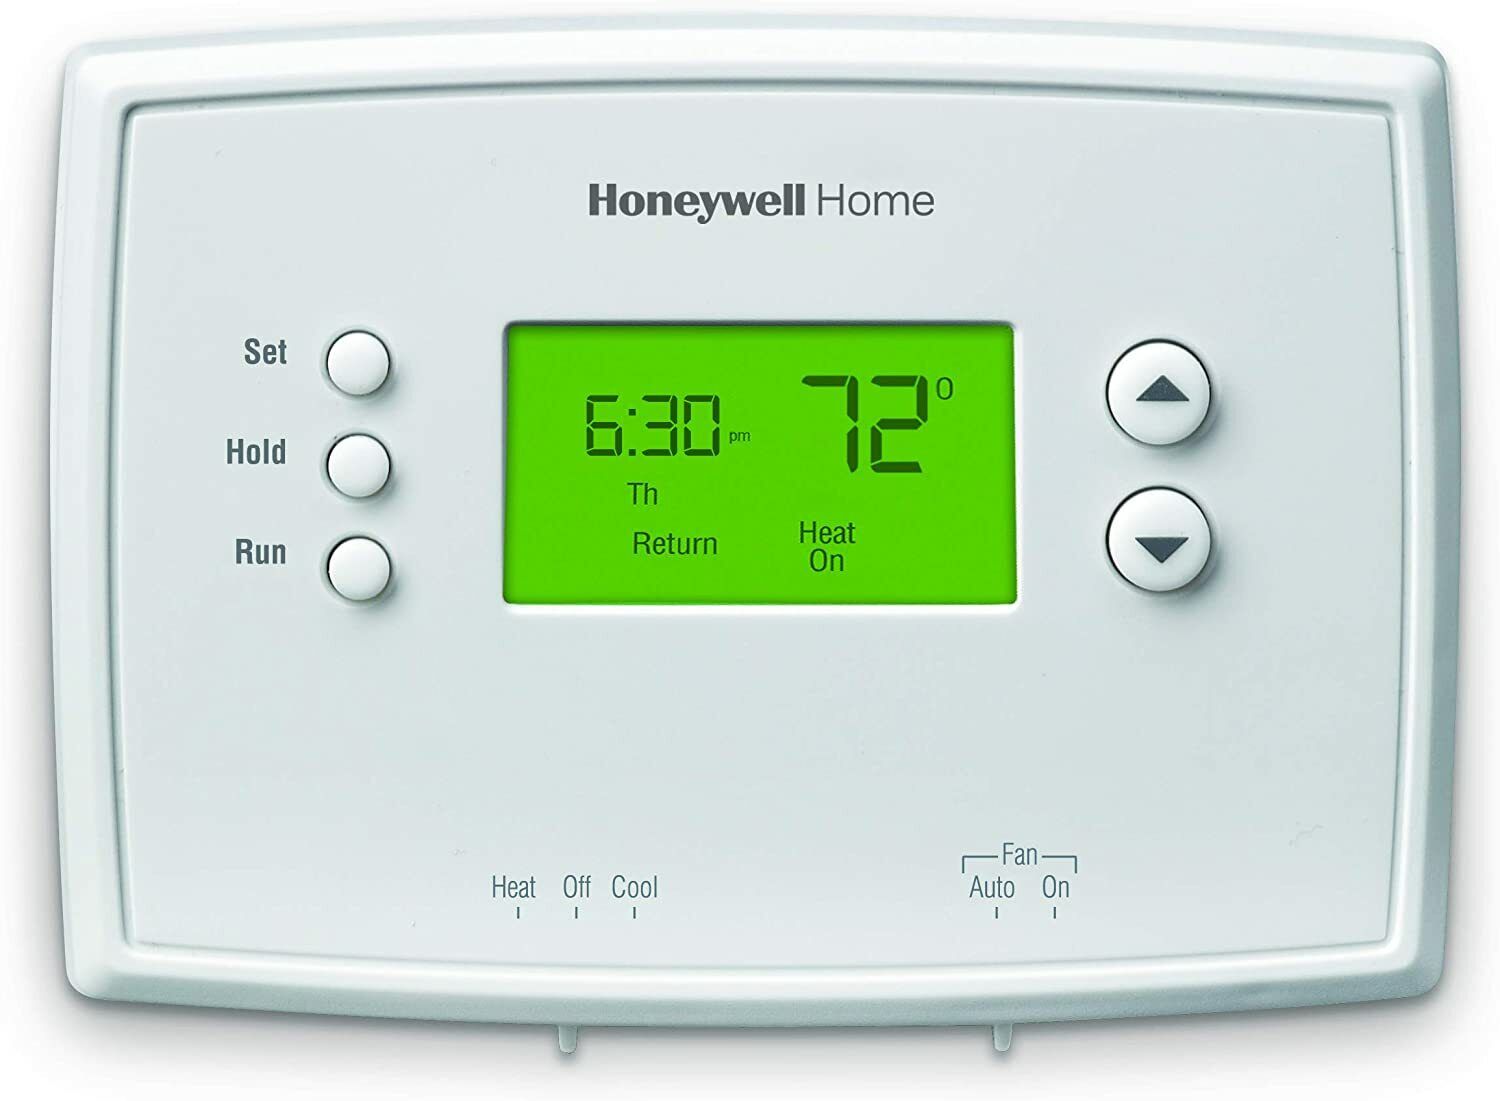 Honeywell Home RTH2510B1018 Thermostat, White